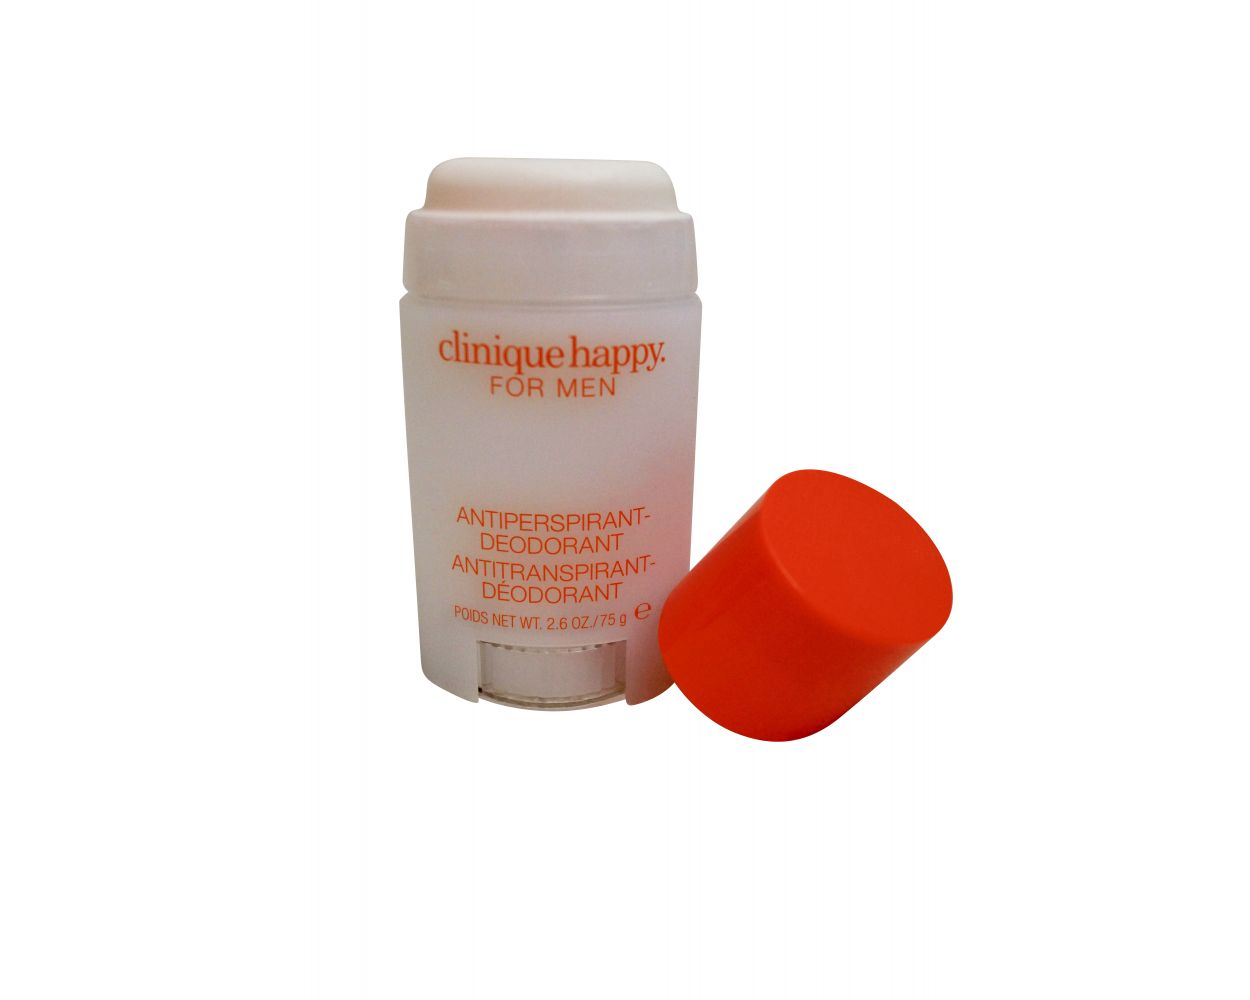 Clinique for Men Antiperspirant-Deodorant | Skincare - Beautyvice.com